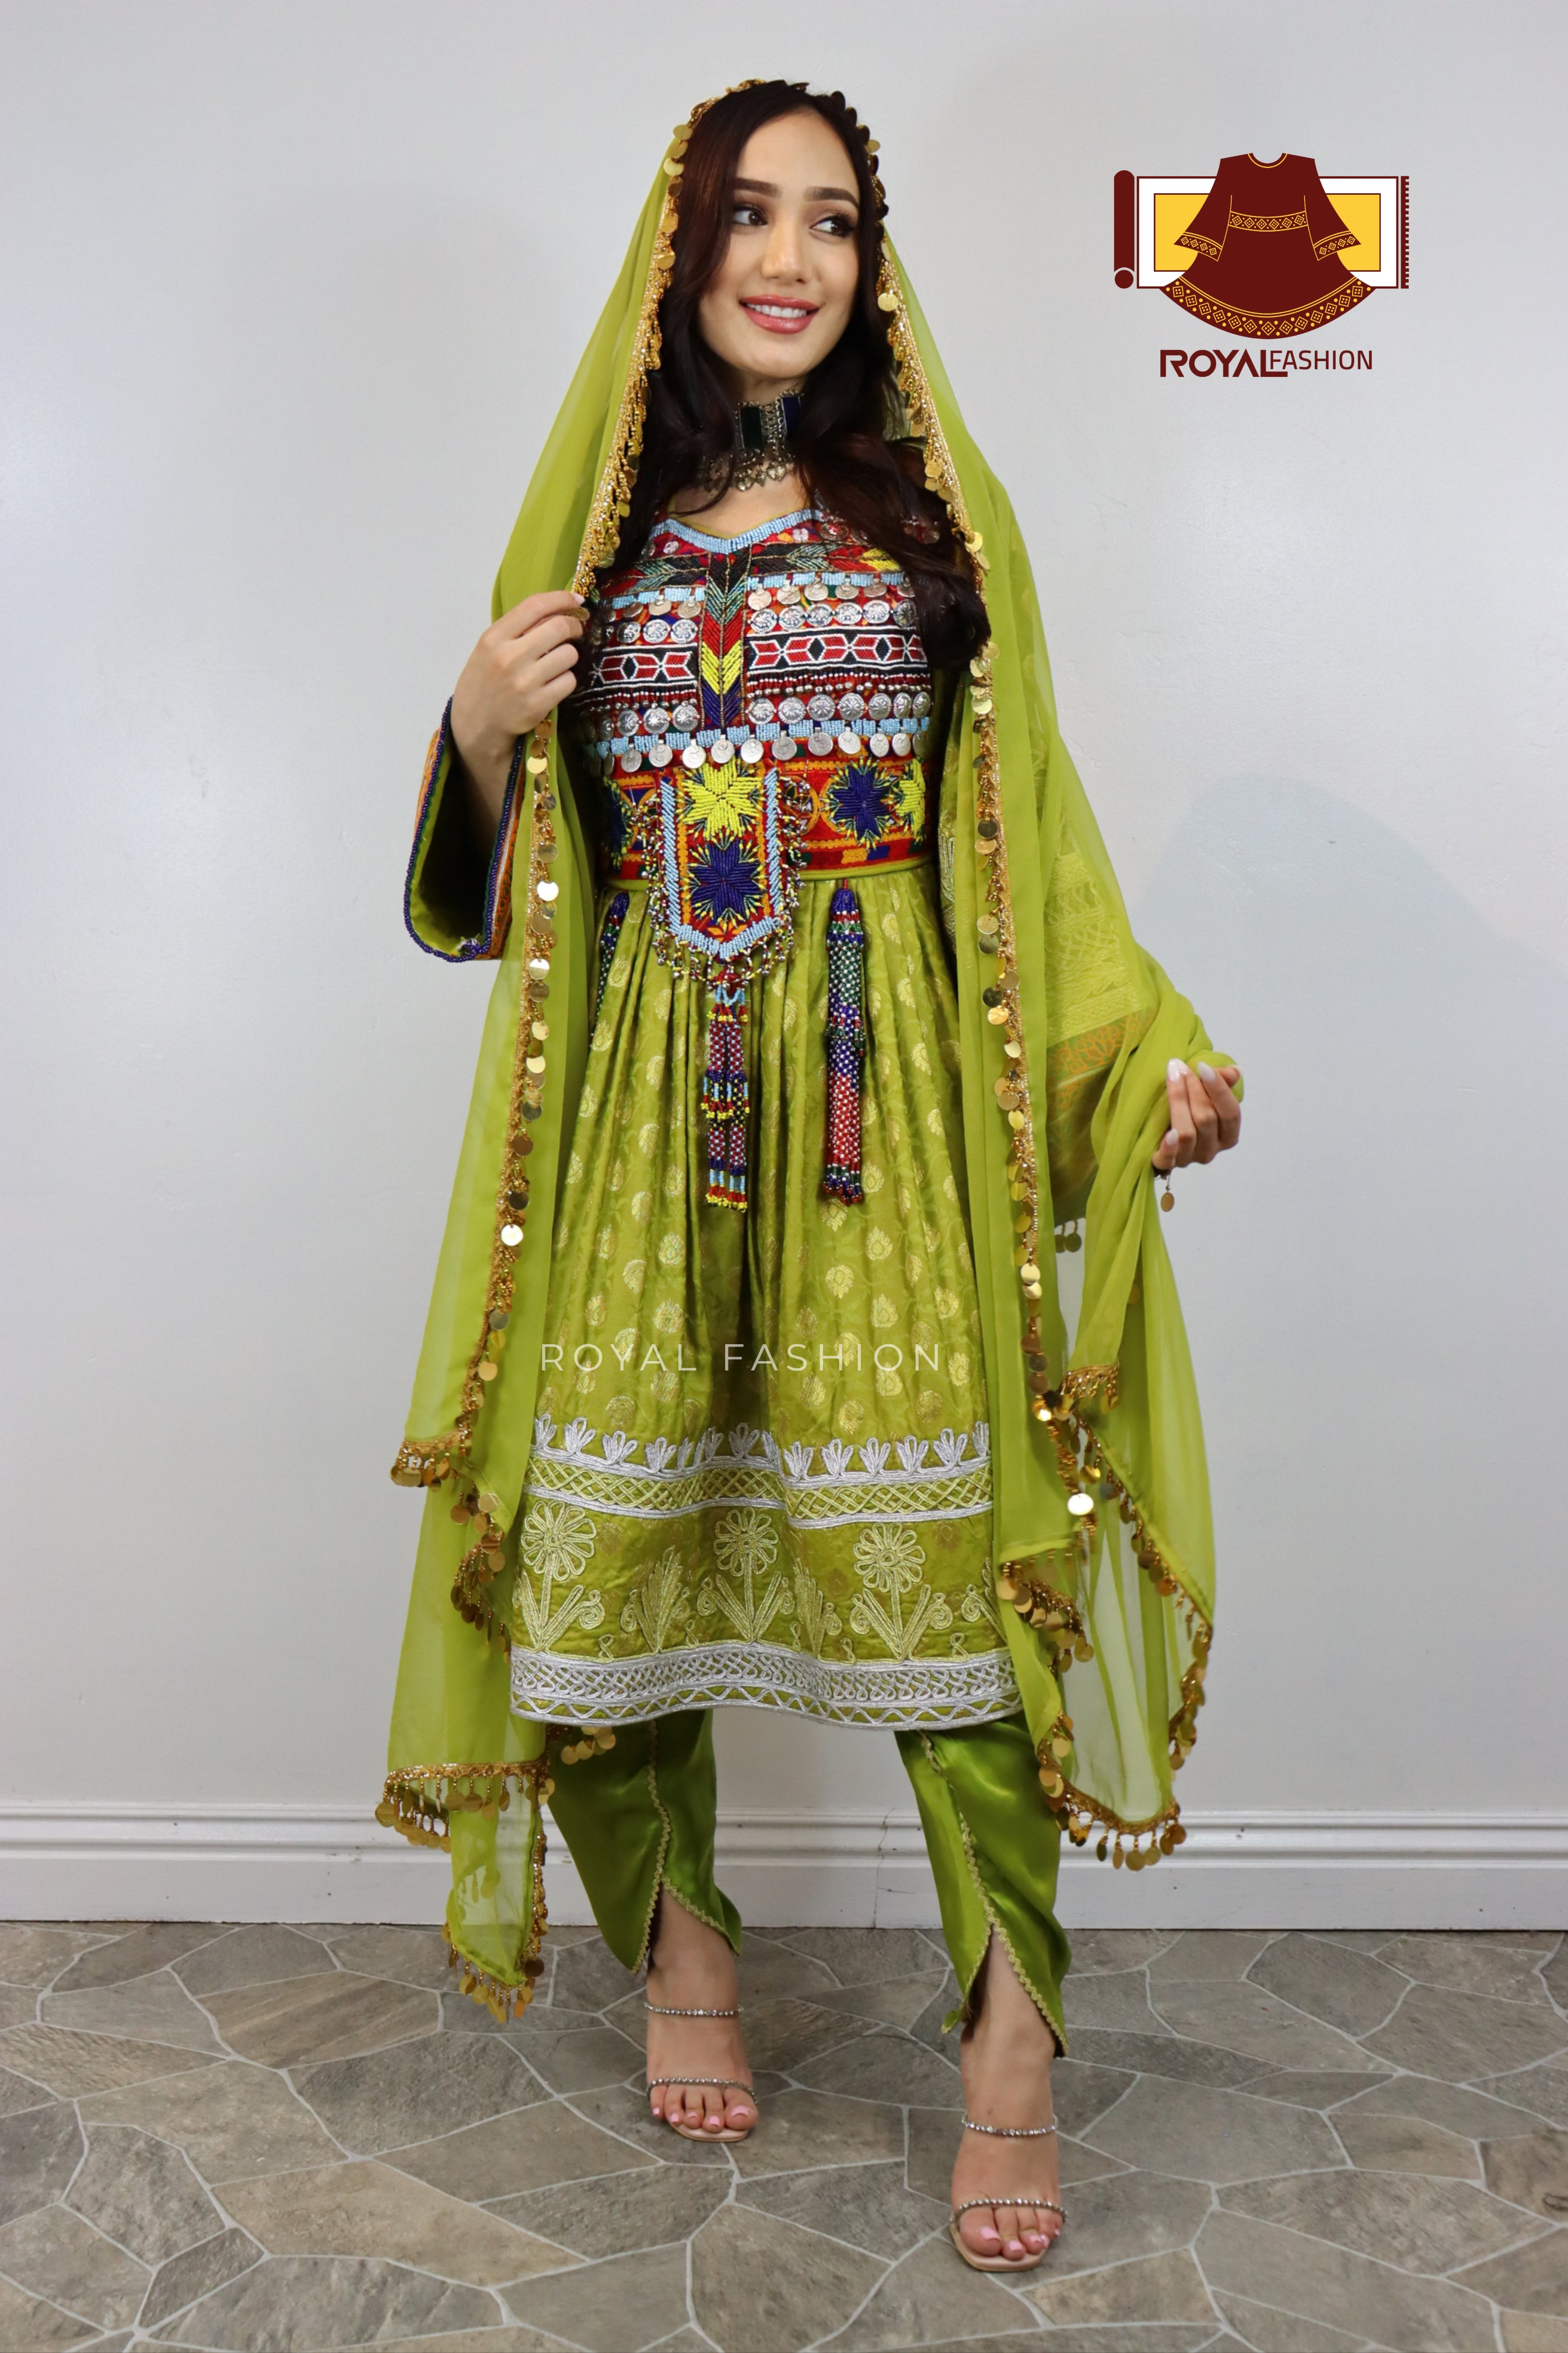 Sarah's Afghan Clothes